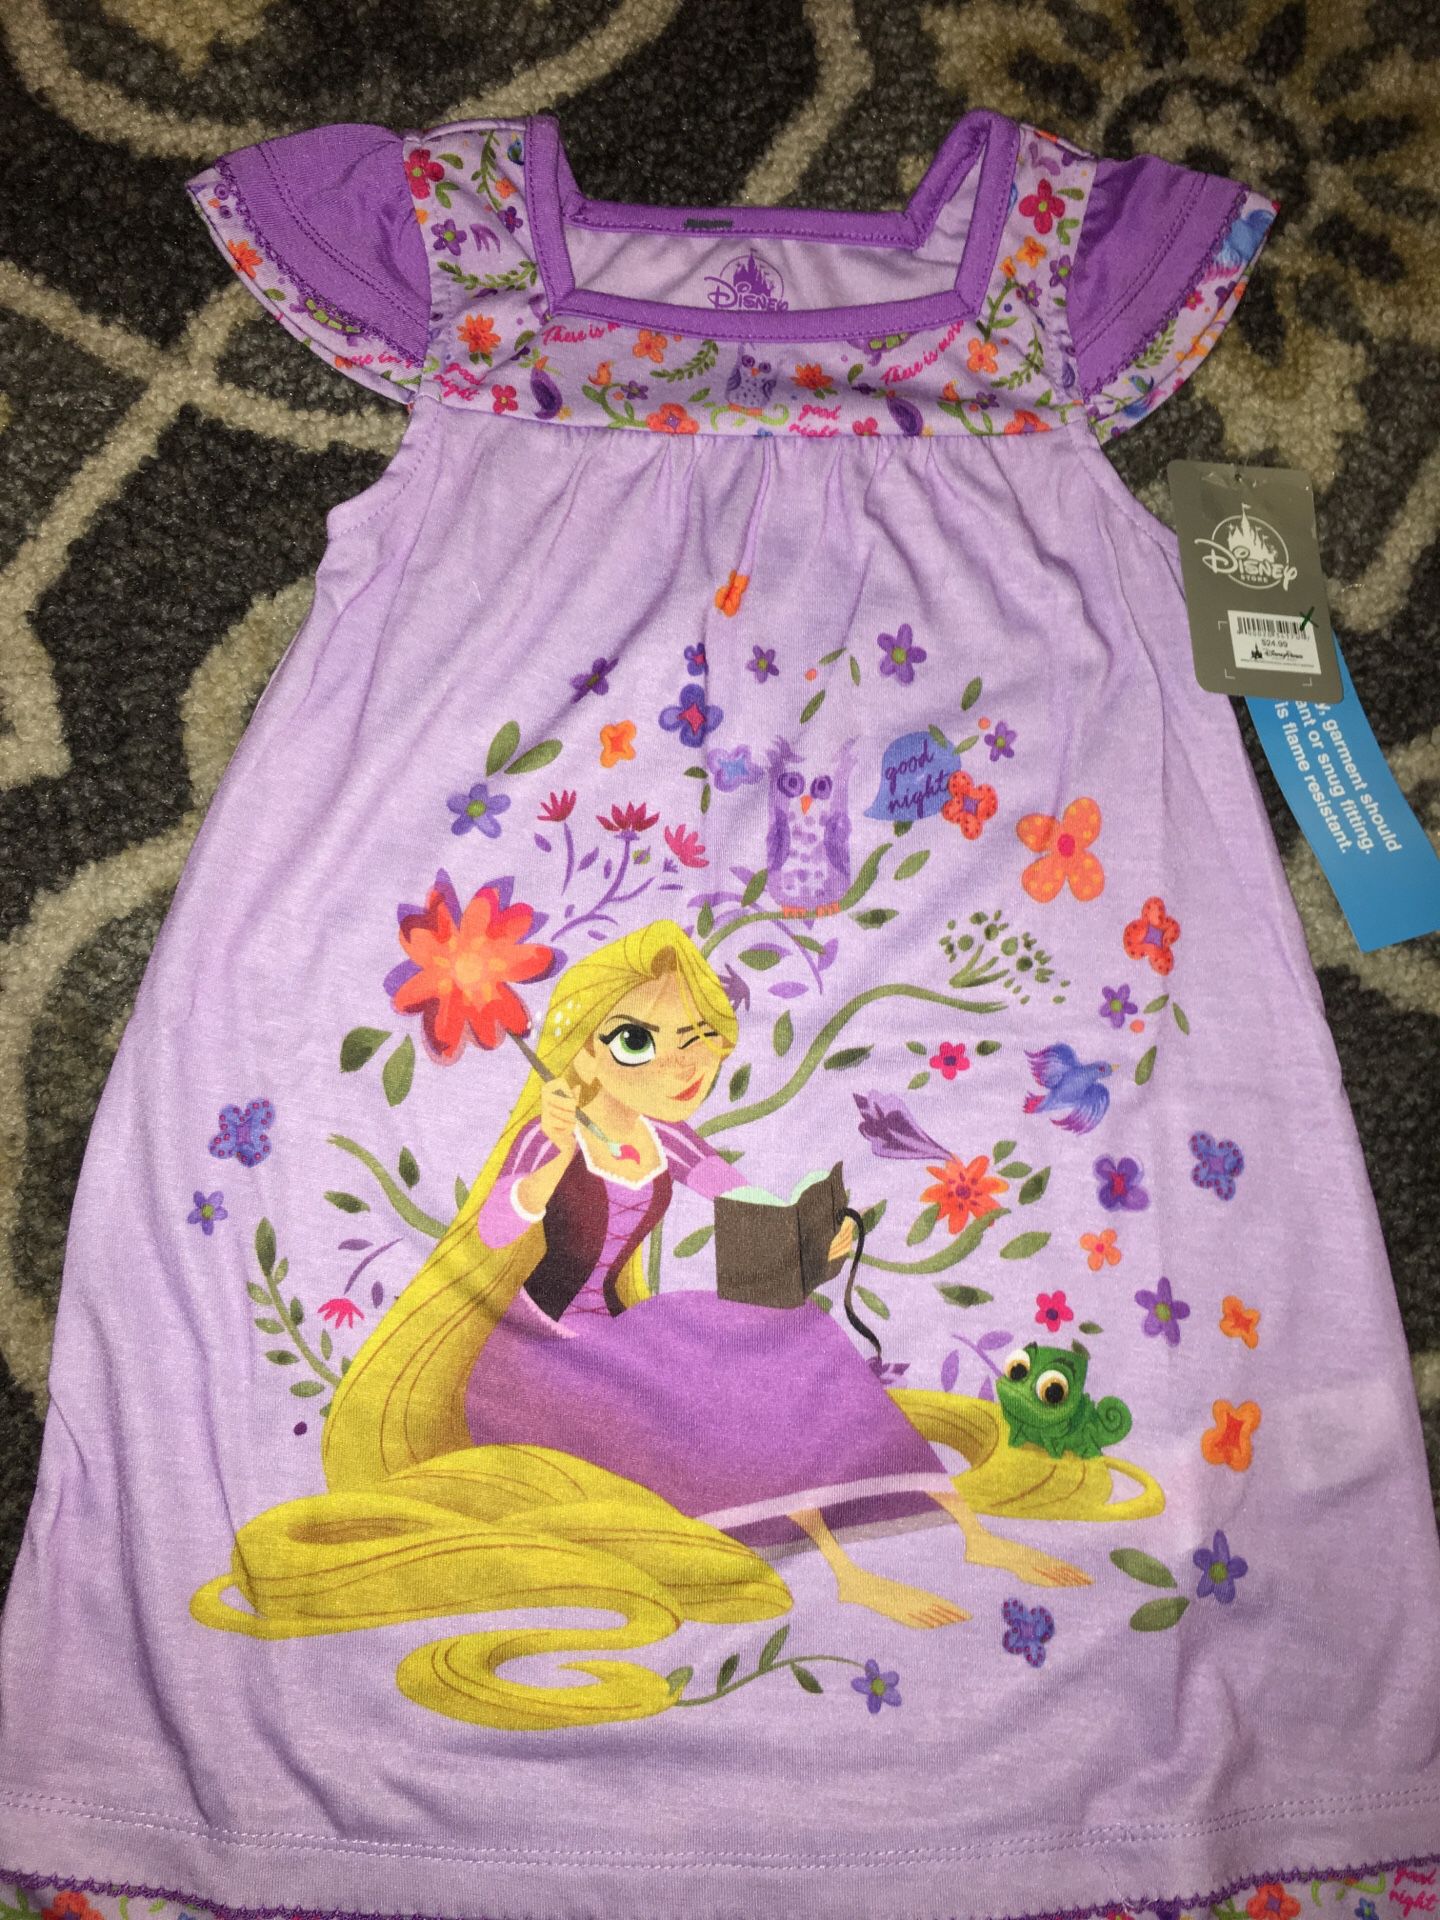 Tangled- Rapunzel girls nightdress size 4